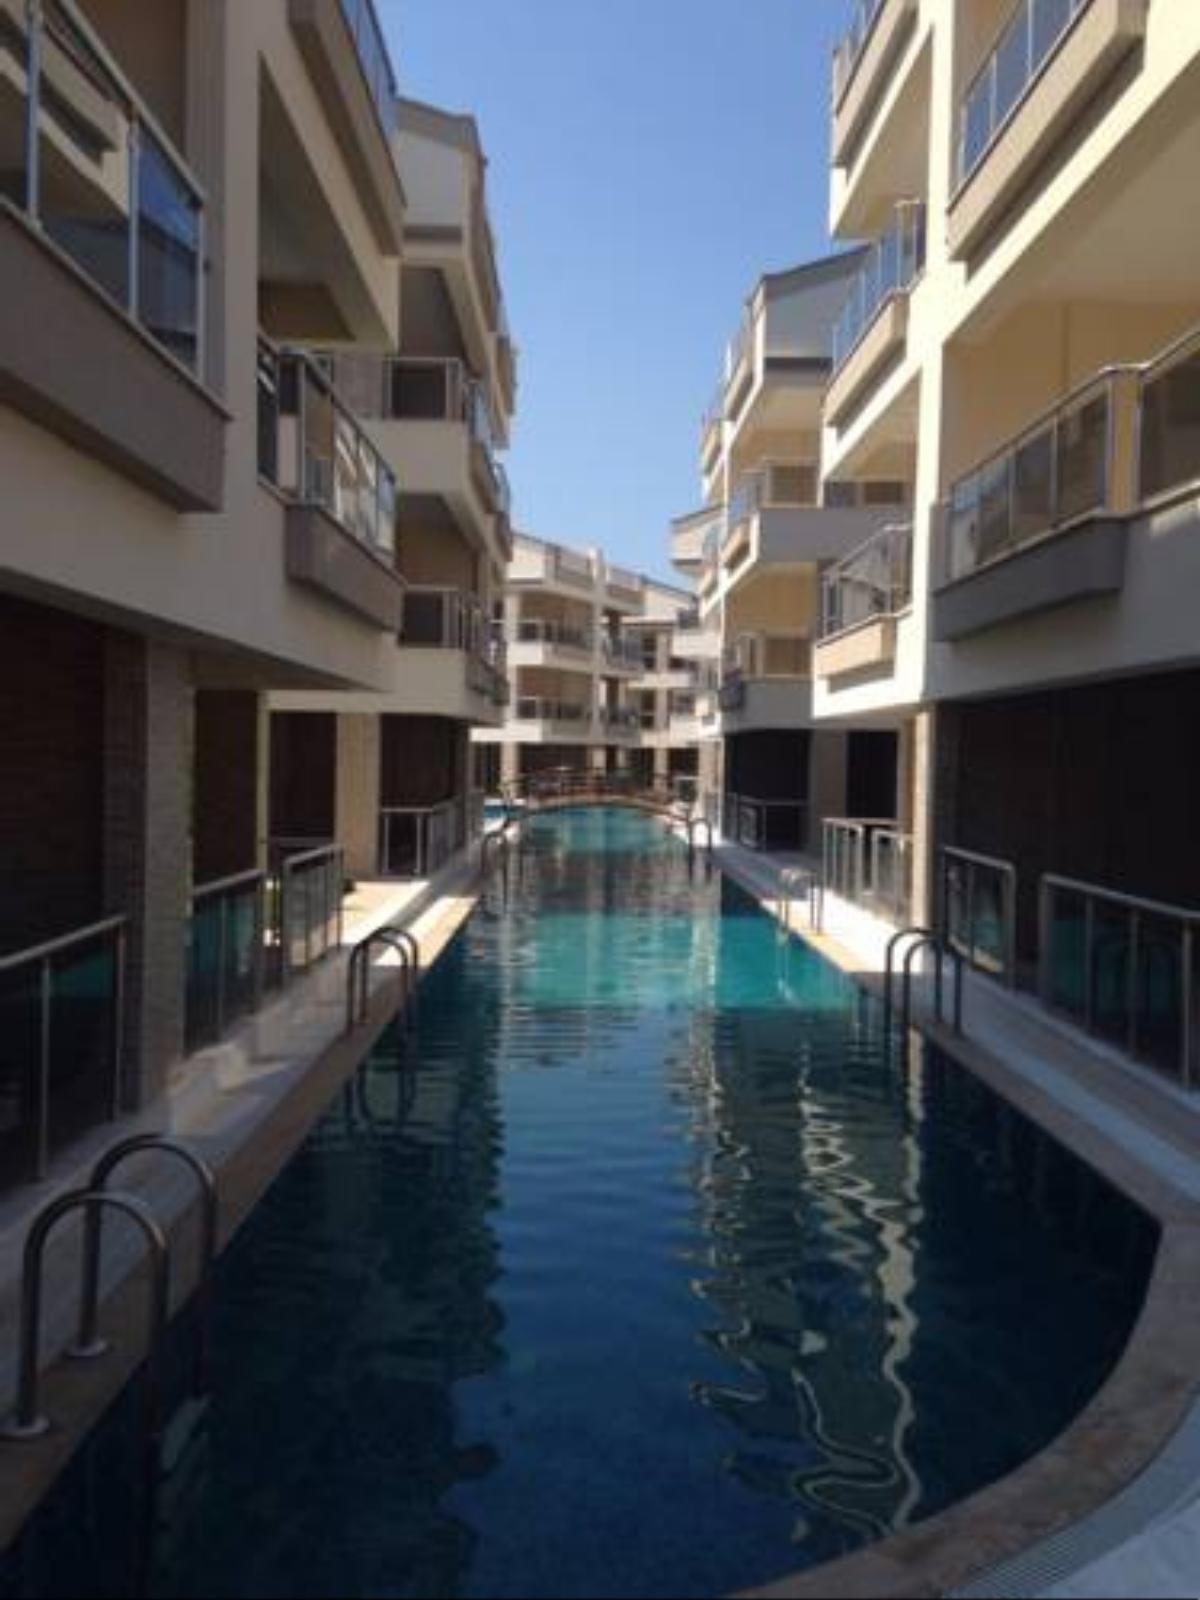 Babylon Poolside Villas Hotel Didim Turkey